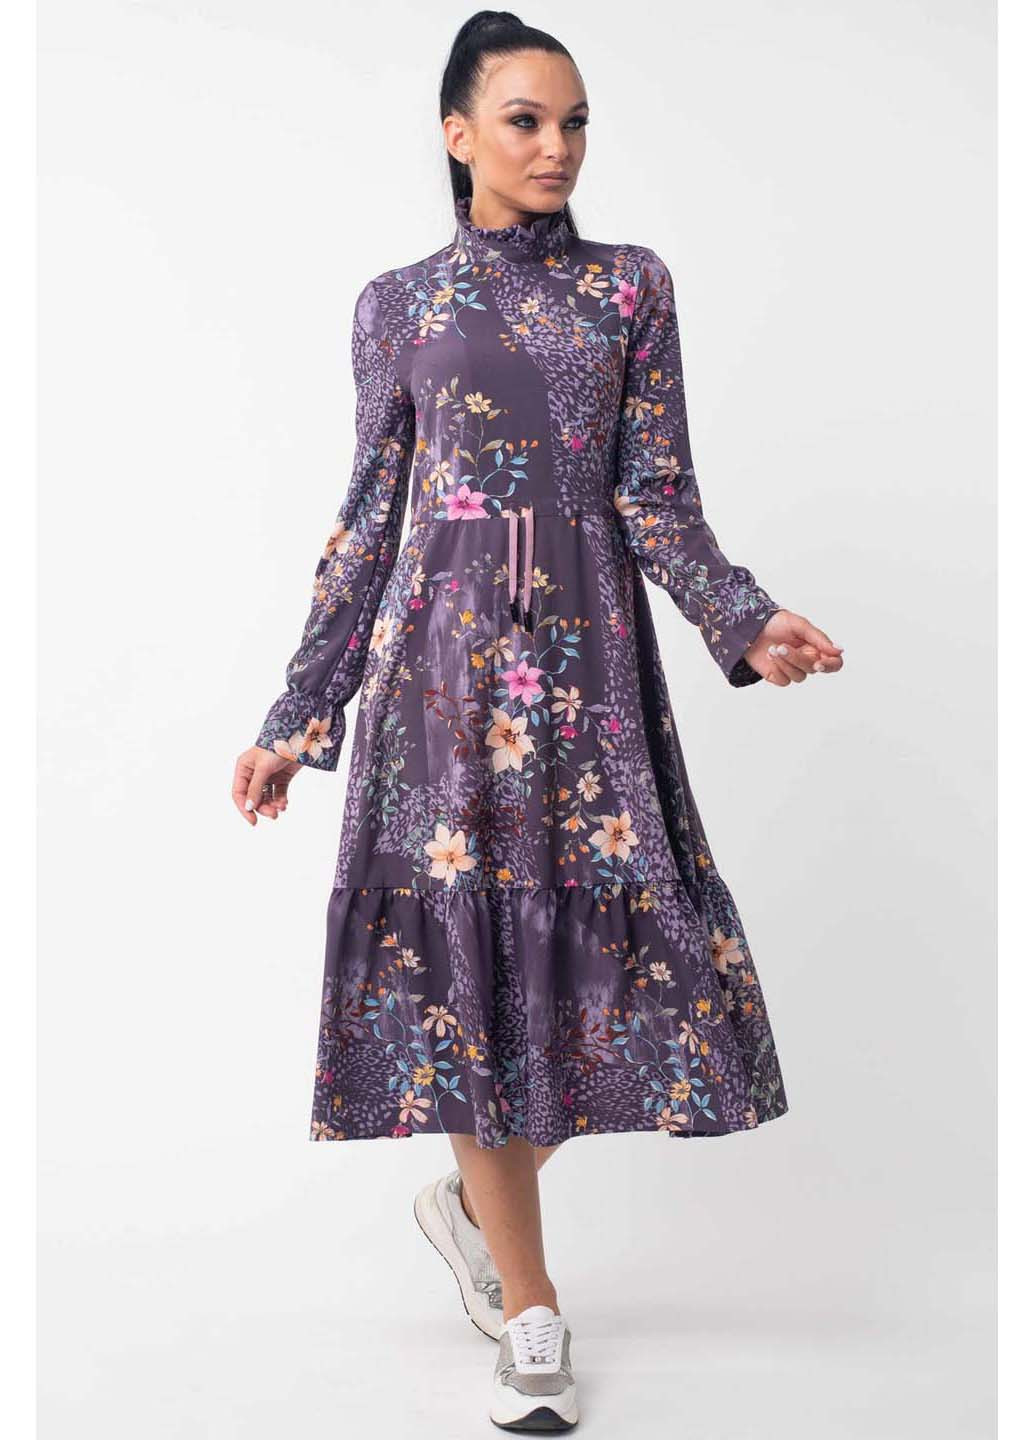 Фиолетовое кэжуал платье Ри Мари